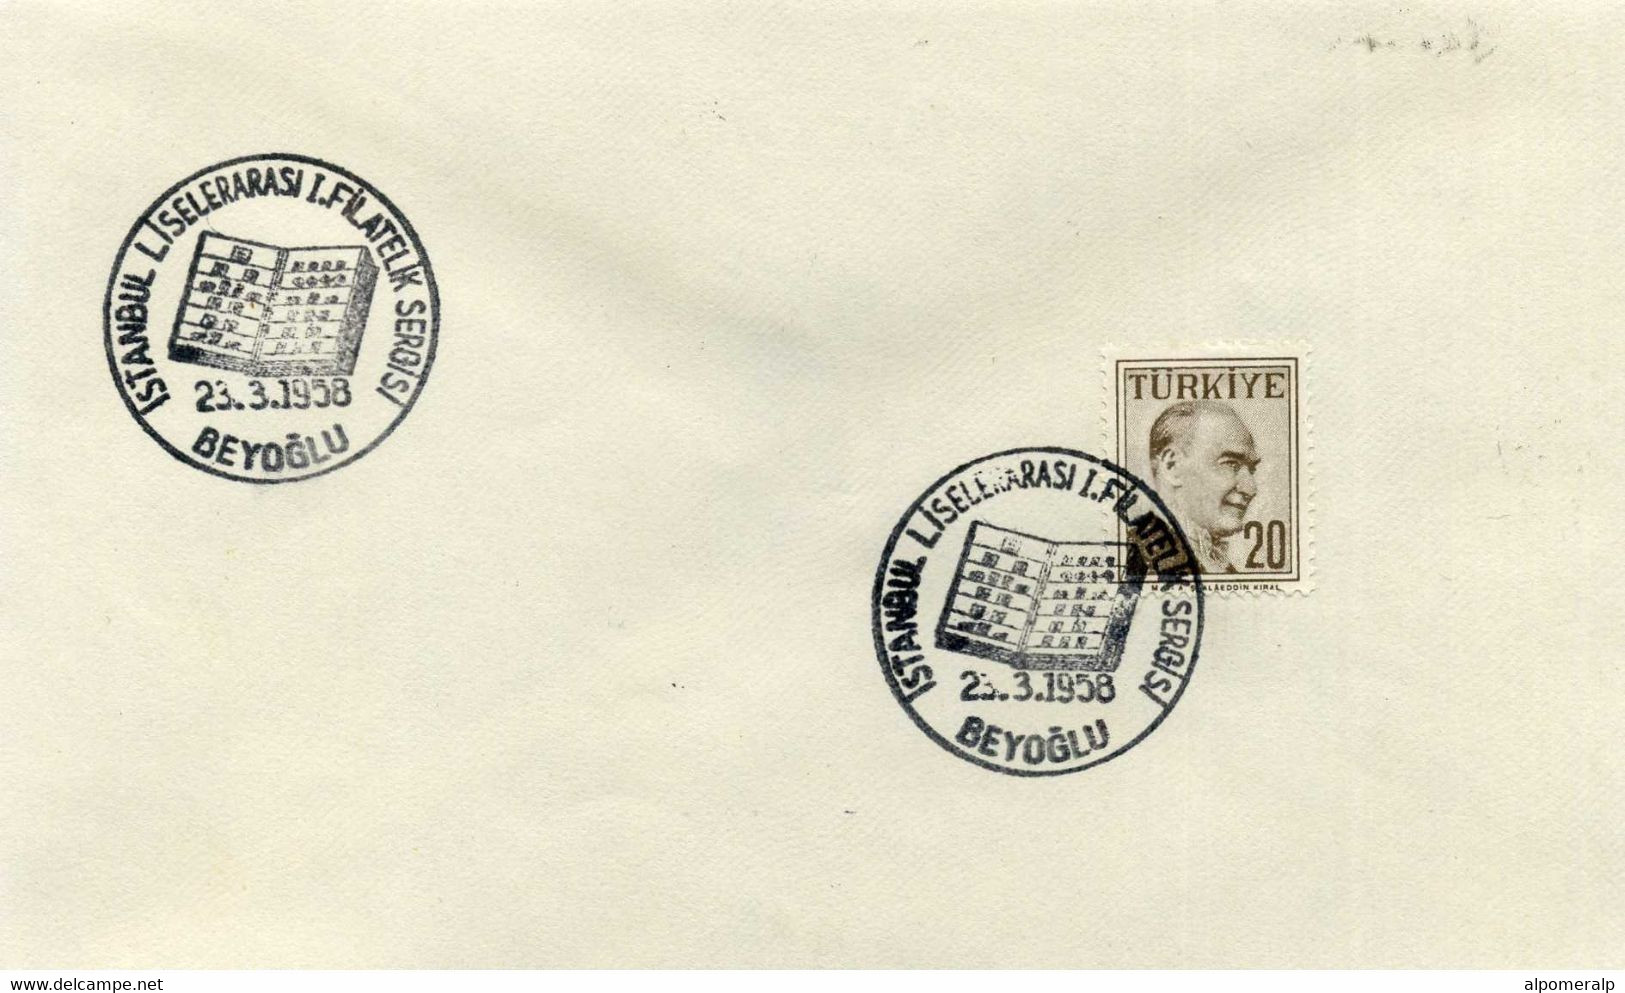 Turkey 1958 High Schools Philatelic Exhibition, Beyoglu, Mar. 23. | Book | Special Postmark - Lettres & Documents